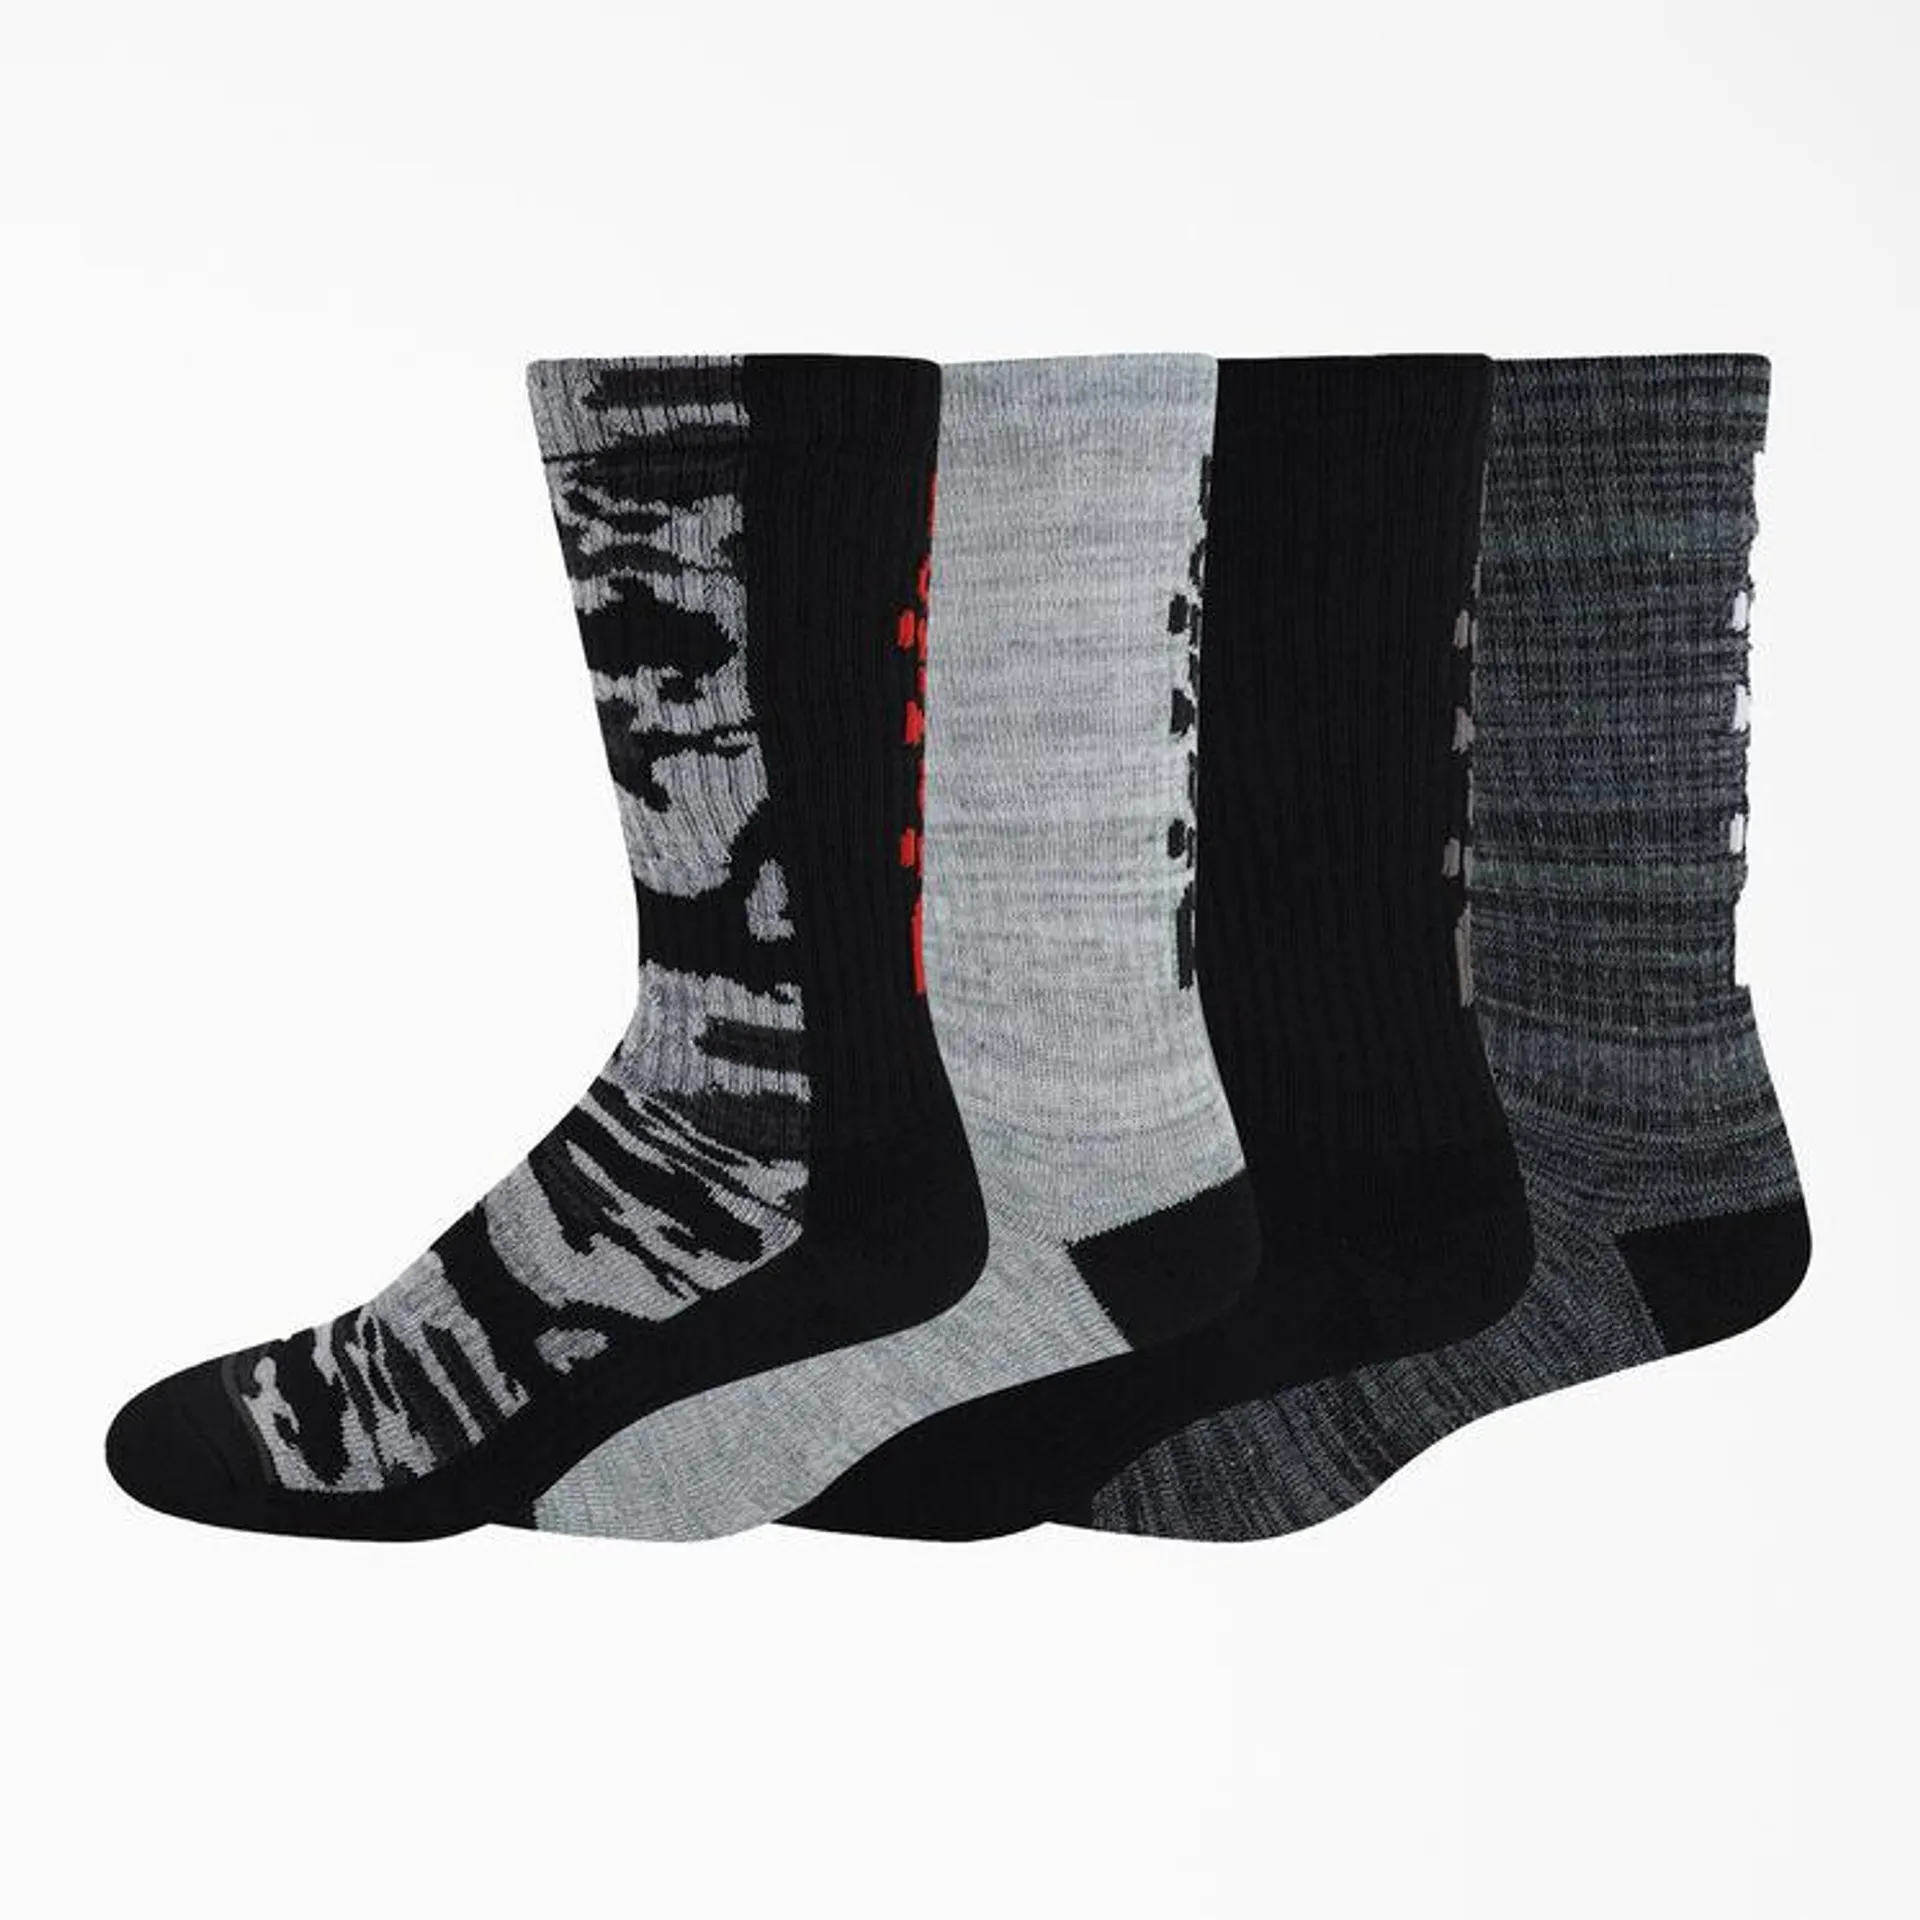 Logo Camo Crew Socks, Size 6-12, 4-Pack, Black Gray Marled